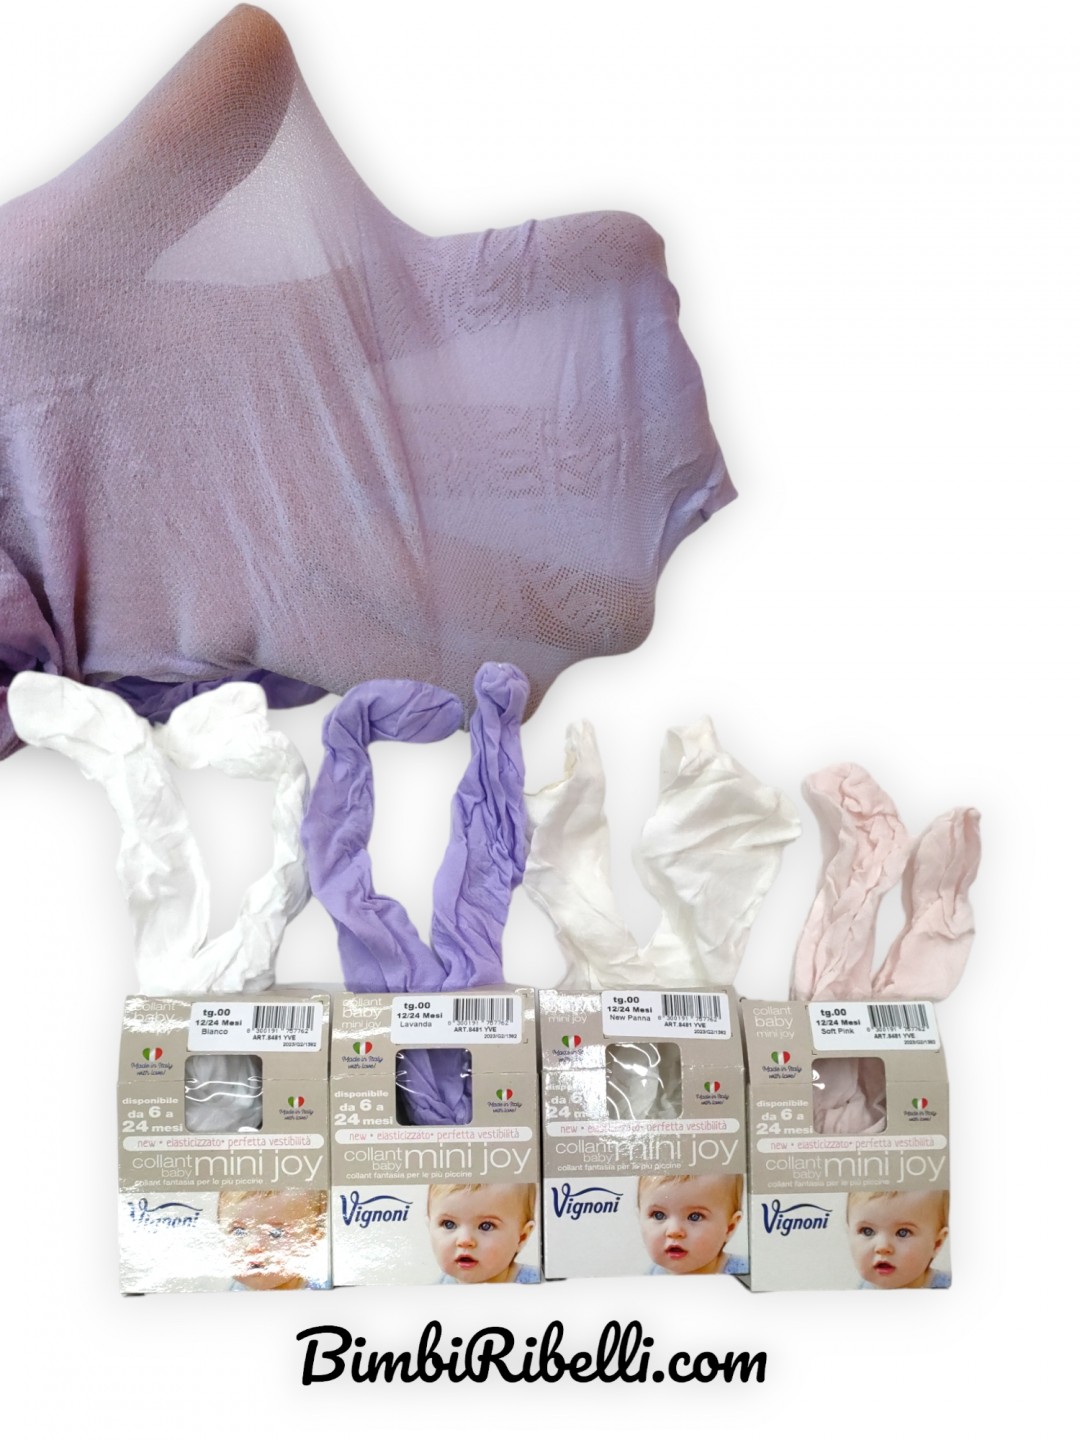 Collant filanca ricamate neonata 12-24 mesi